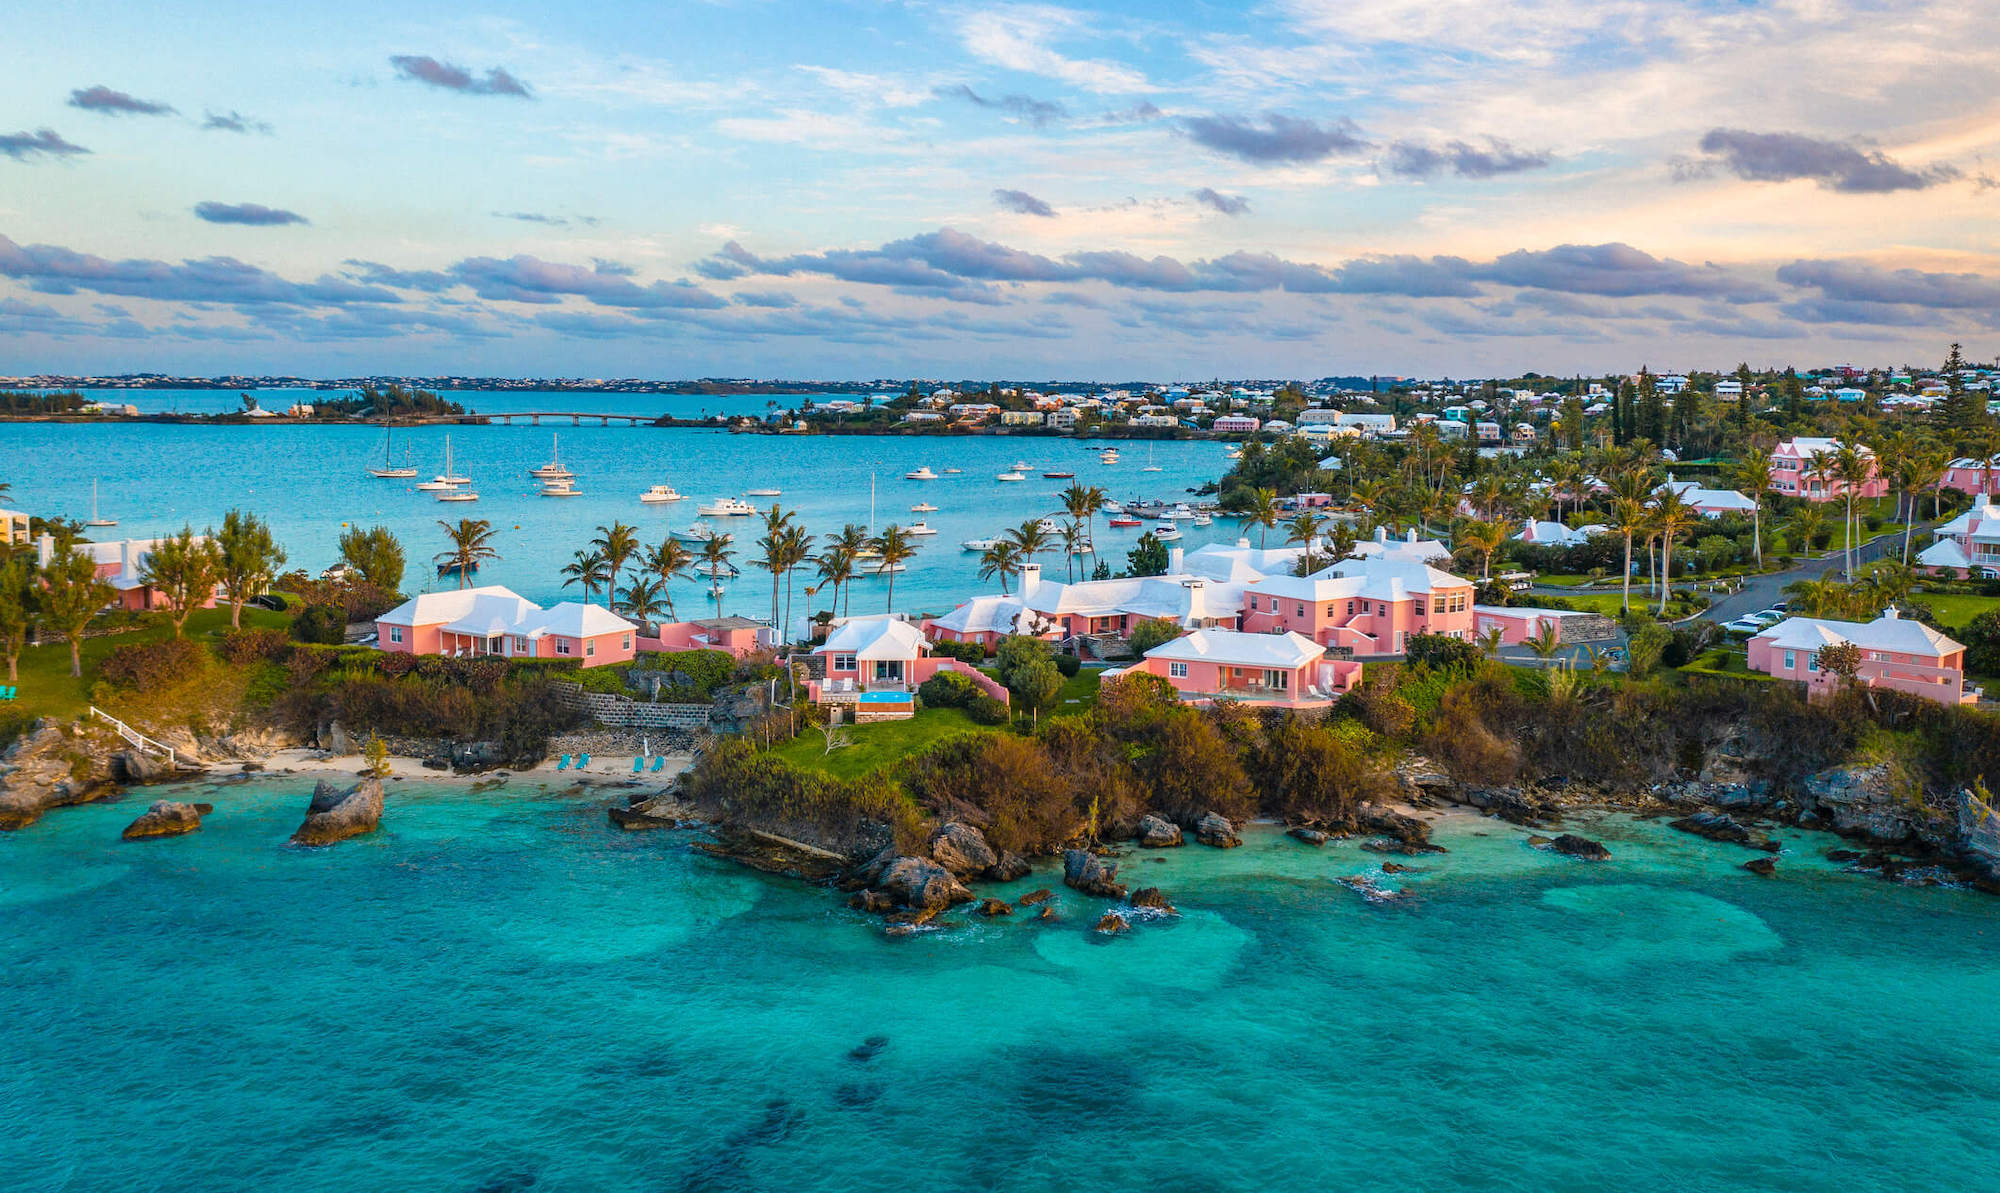 Cambridge Beaches Resort & Spa, Bermuda